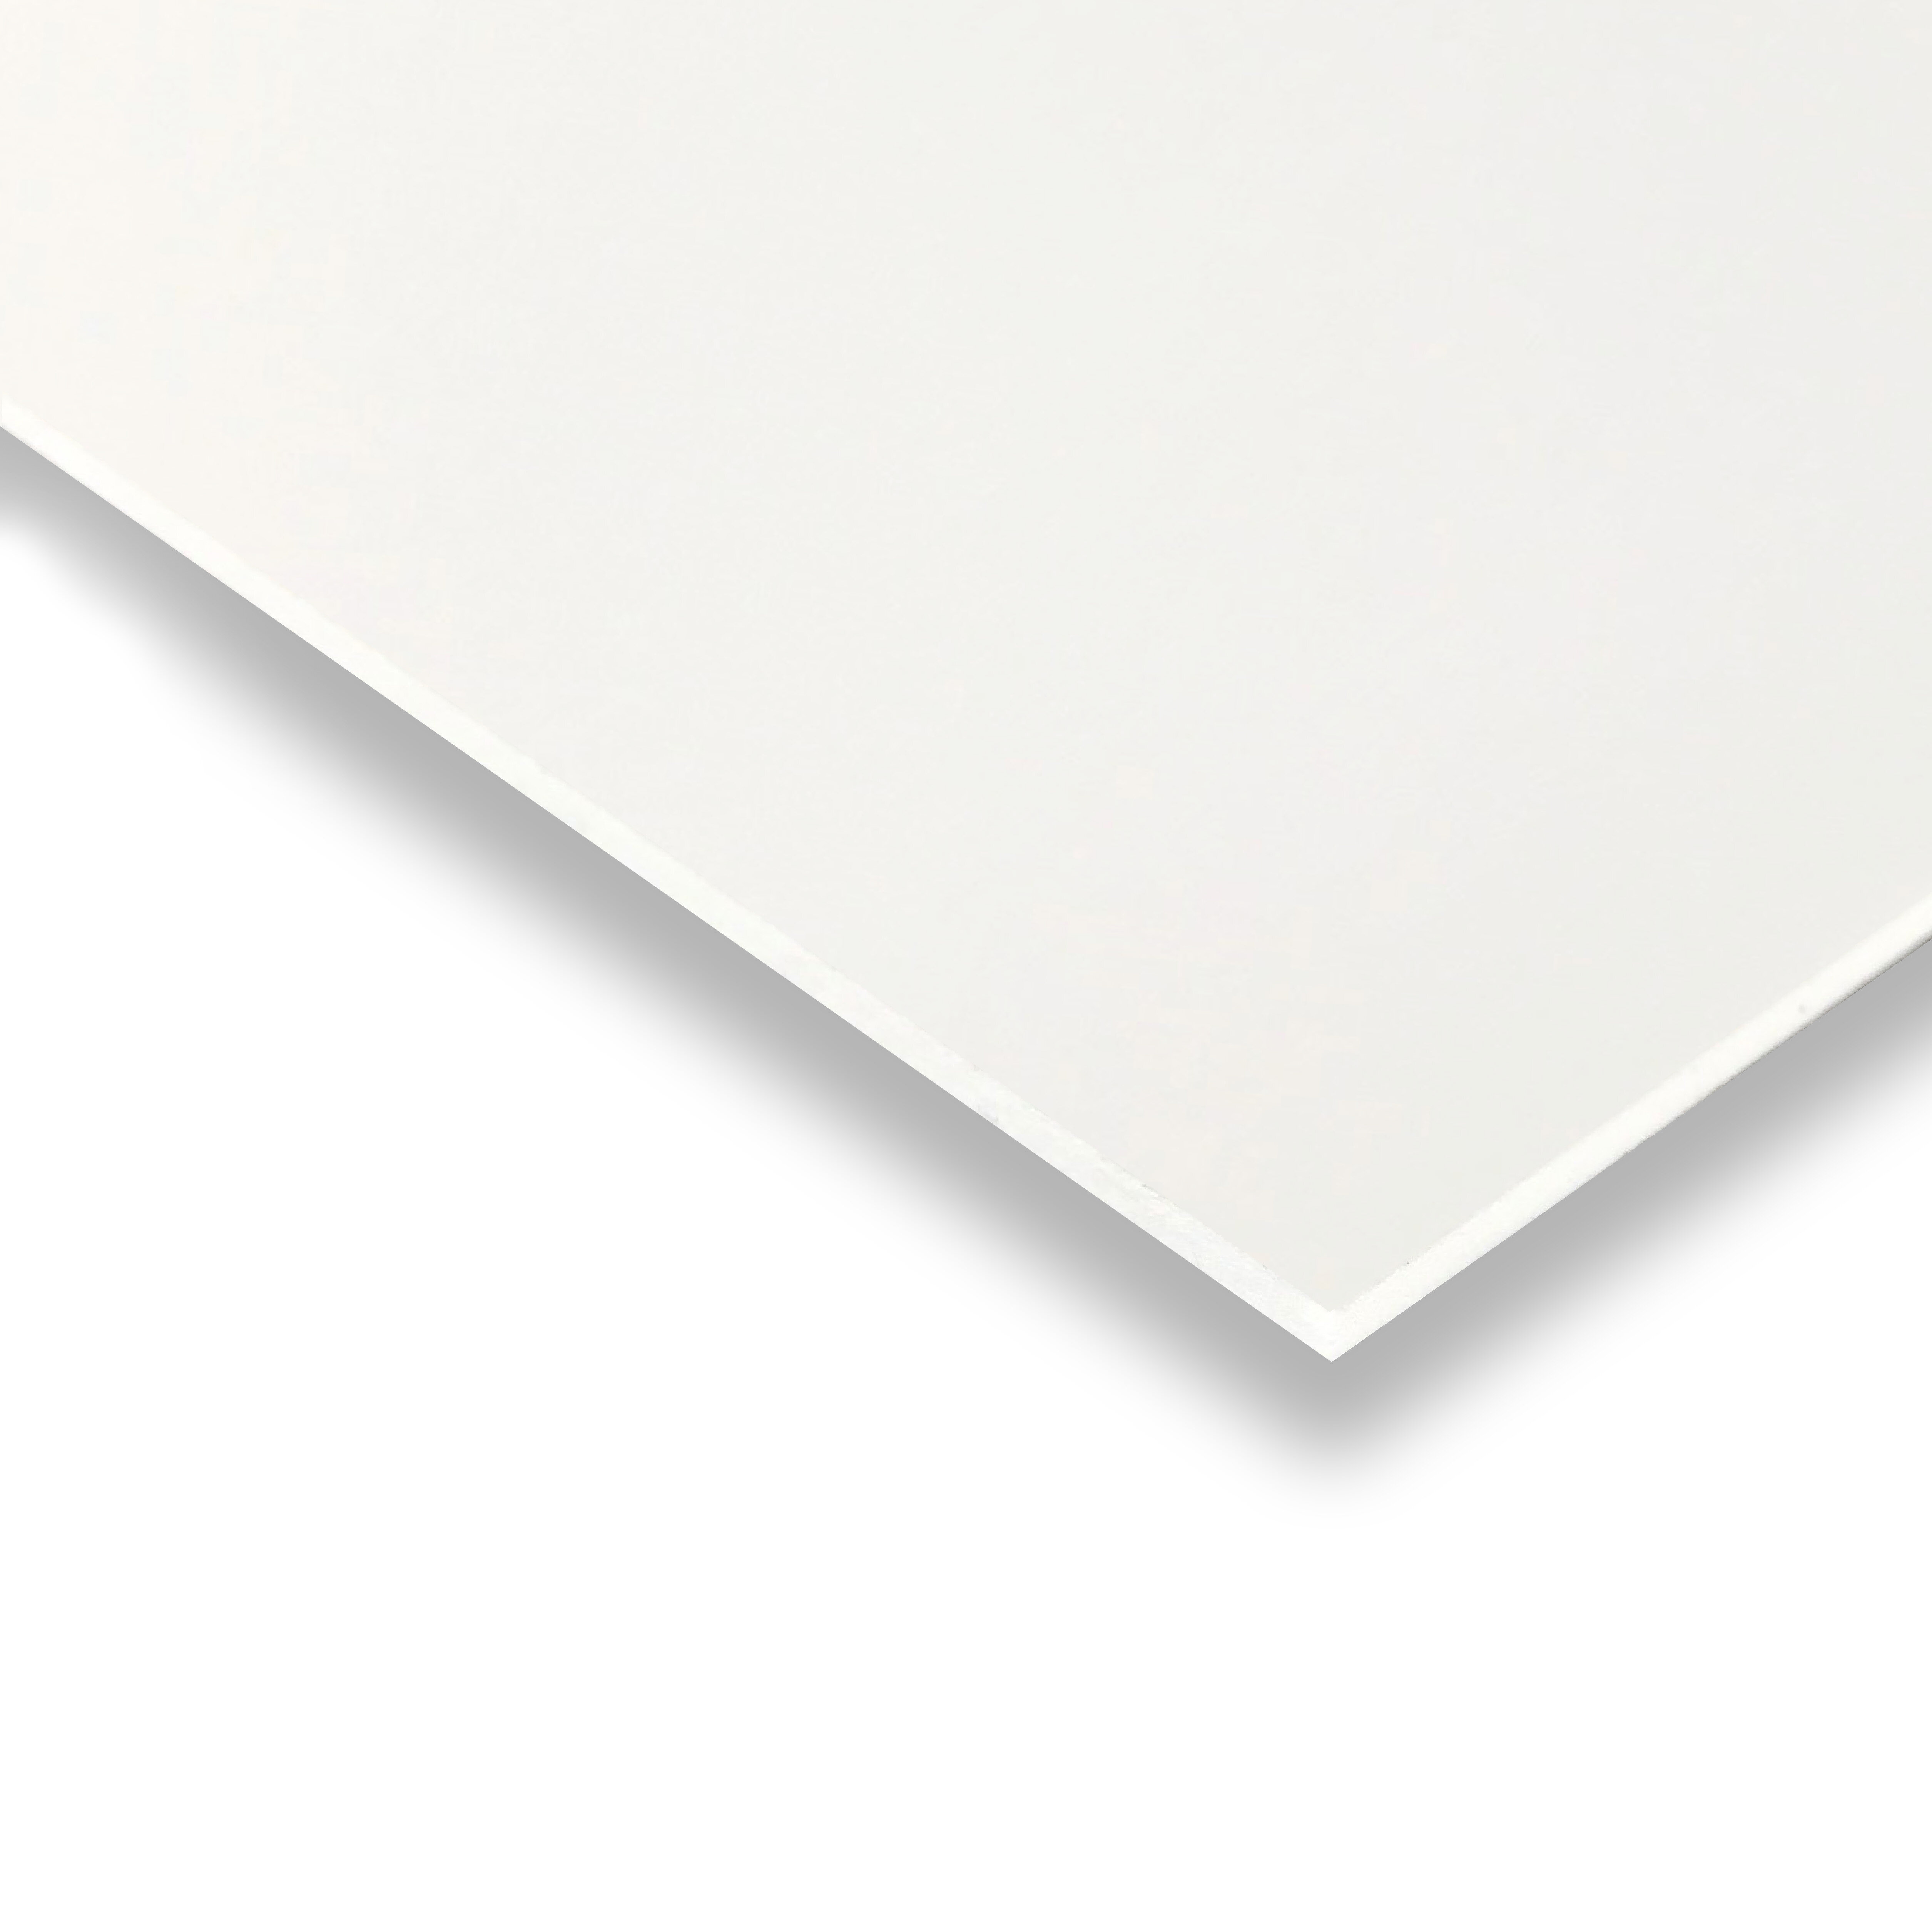 Fin de série - Masterfoam print SF blanc 986 mm x 2474 mm 3 mm